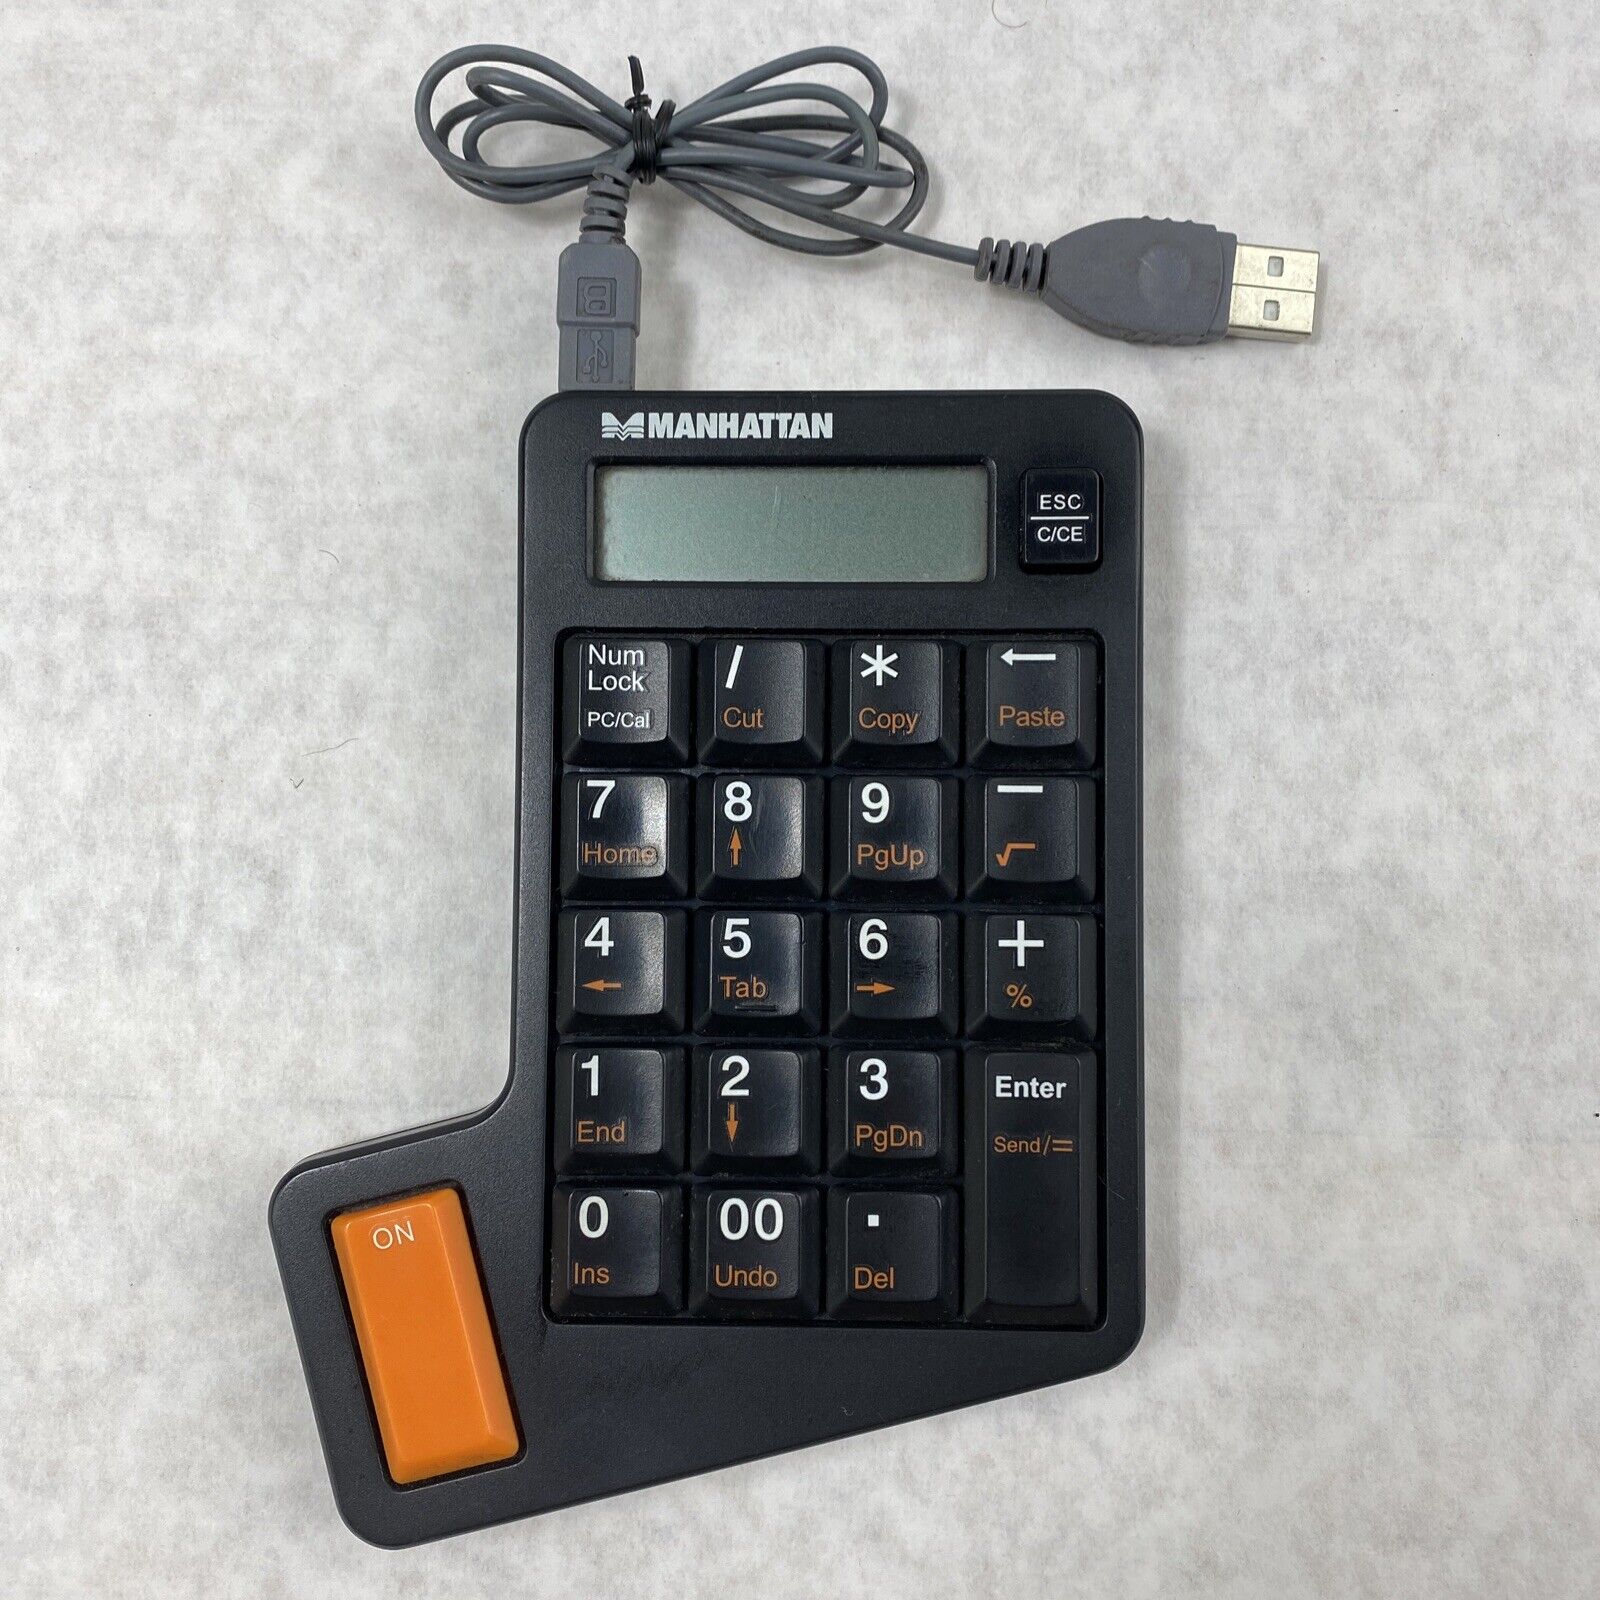 Manhattan 177399 MH USB 3-in-1 Numeric Keypad WORKING